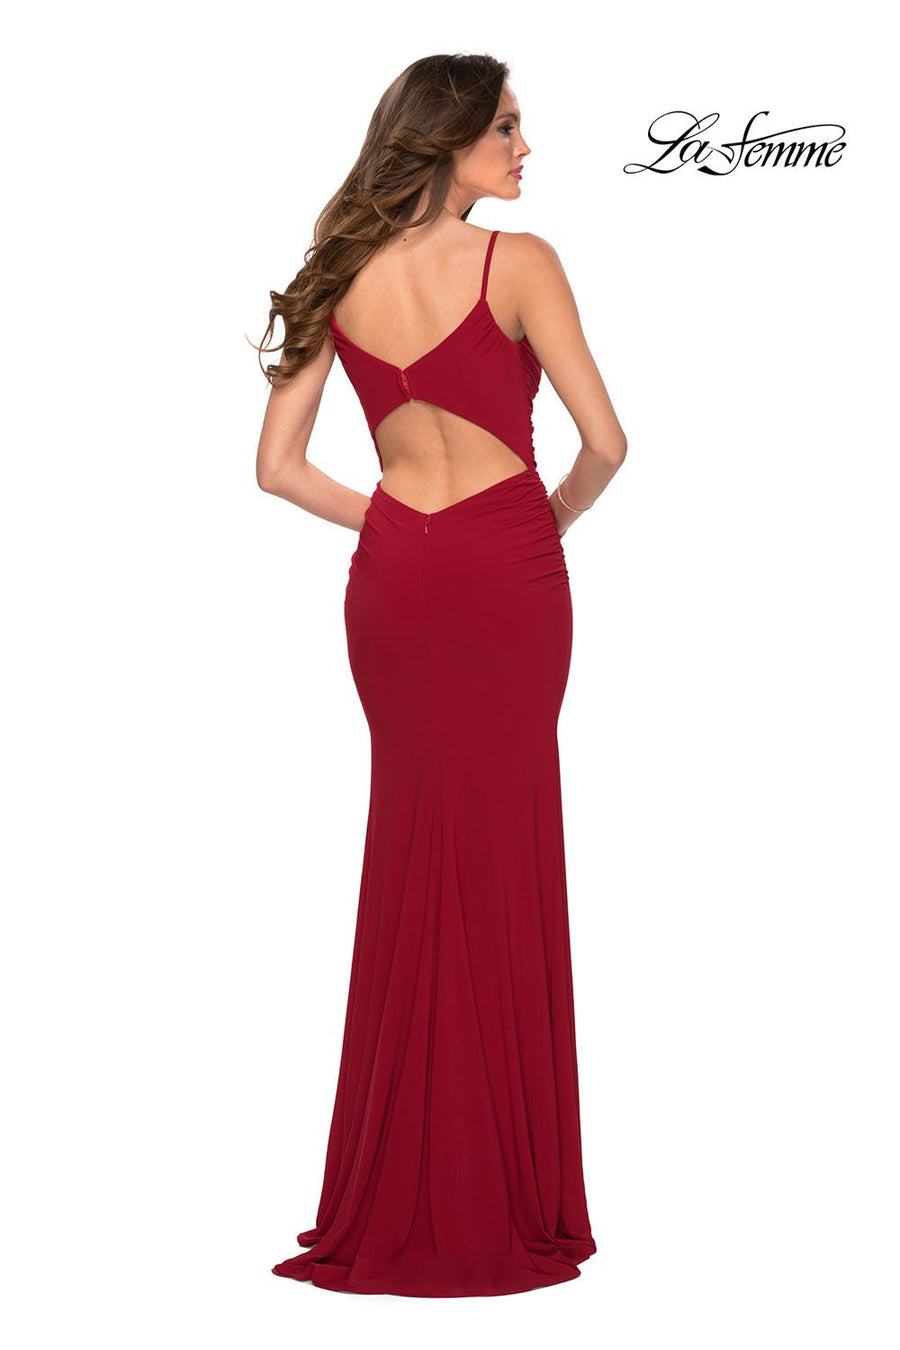 Jovani Dress 06017  Red One Shoulder Beaded Mermaid Dress